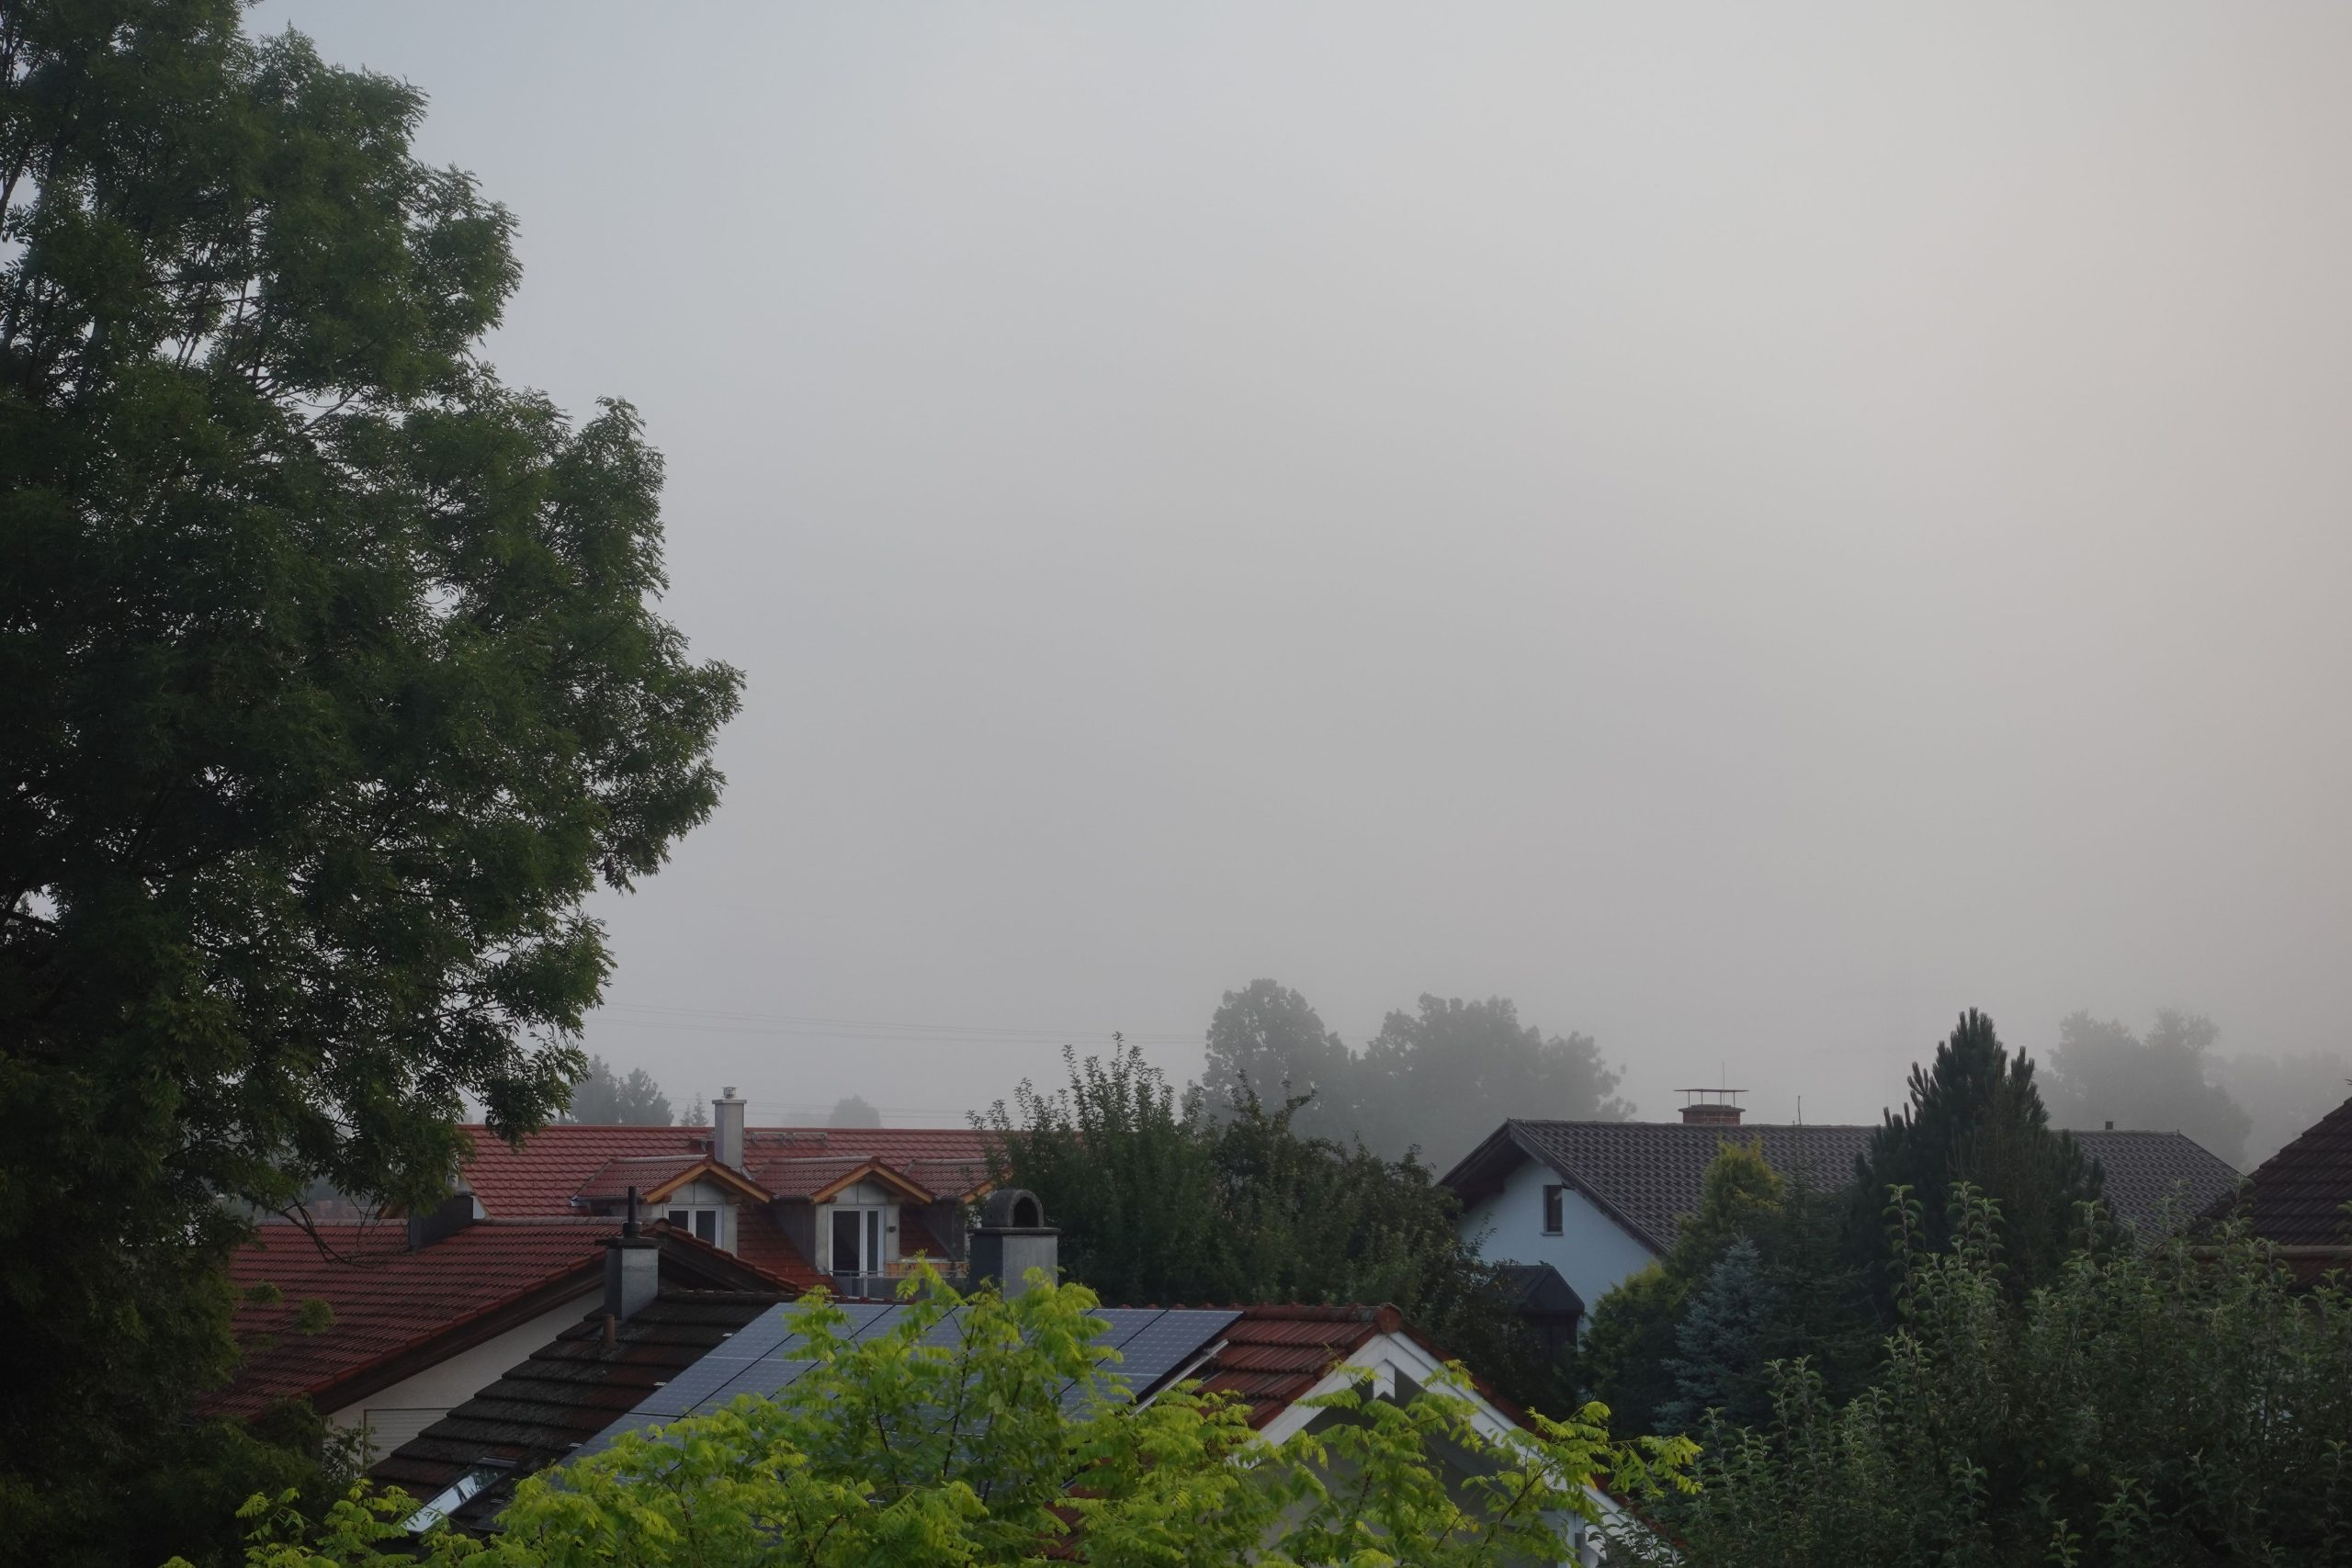 Das Rosenheimer Ortsteil Kastenau in Nebel gehüllt. Foto: Innpuls.me